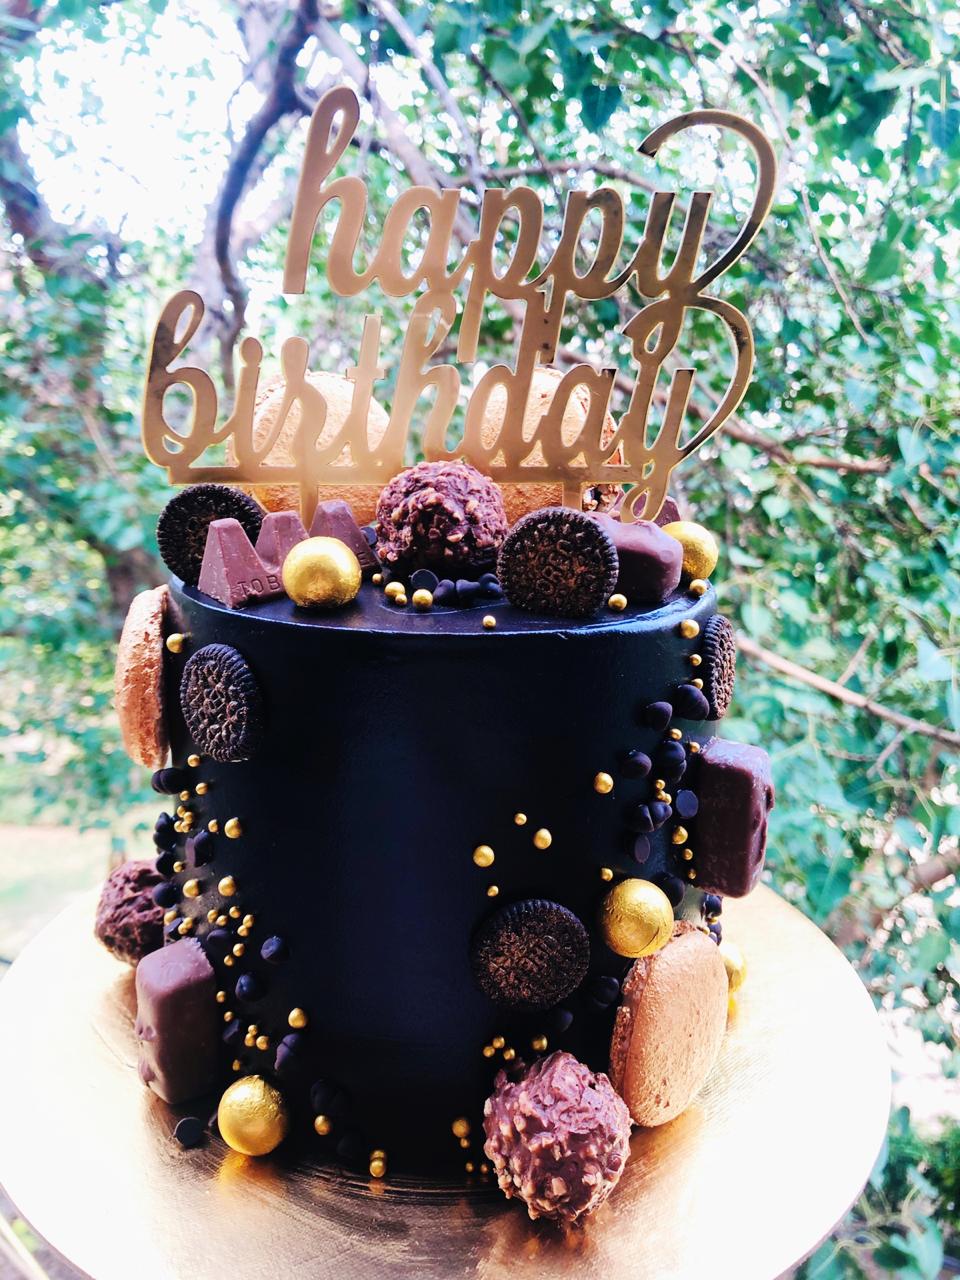 File:HK Maxim's Cakes bakery 生日蛋糕 Happy Birthday cake 朱古力 chocolate powder  cream coffee color wood table background April 2017 Lnv2 01.jpg - Wikimedia  Commons